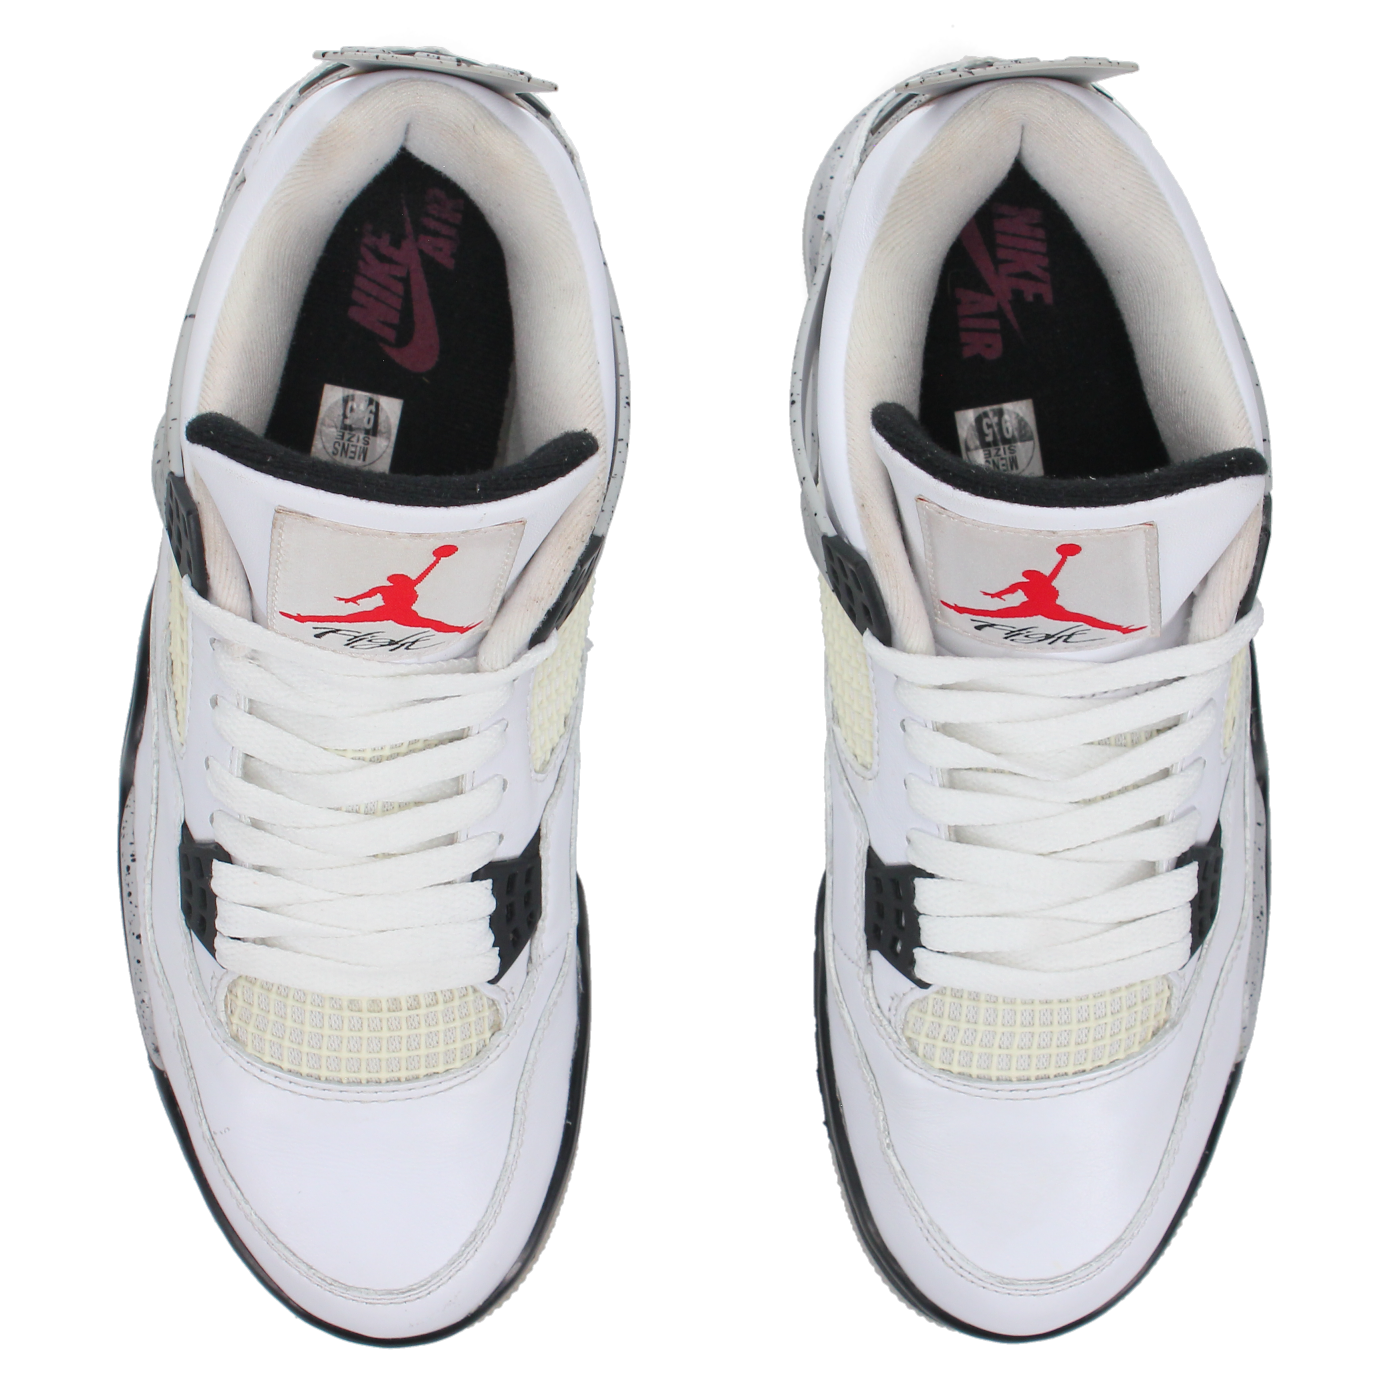 Jordan 4 Retro 'White Cement' 2016 - Side View